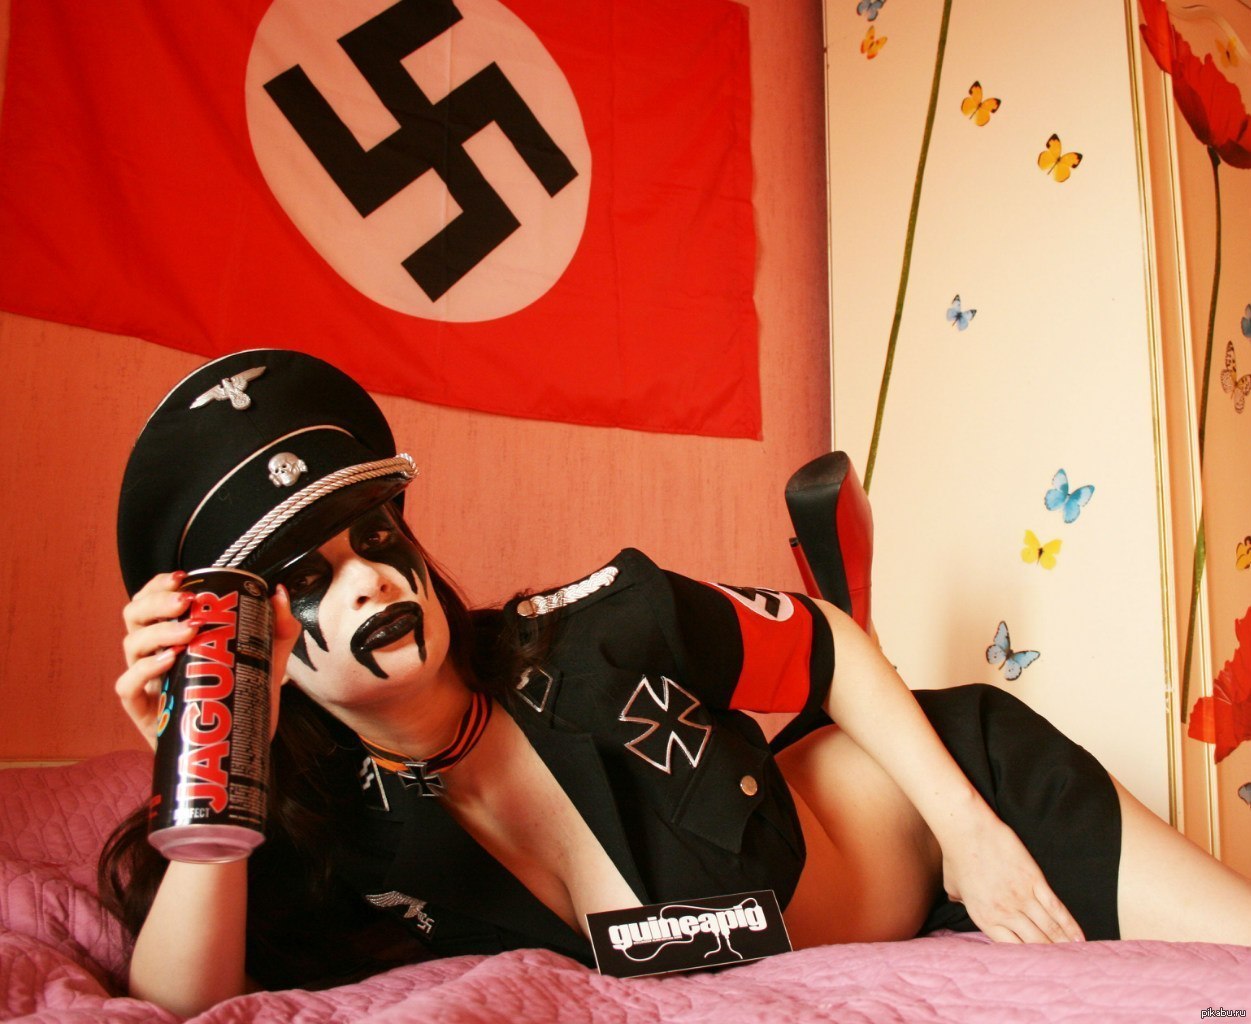 Nazi porn movies